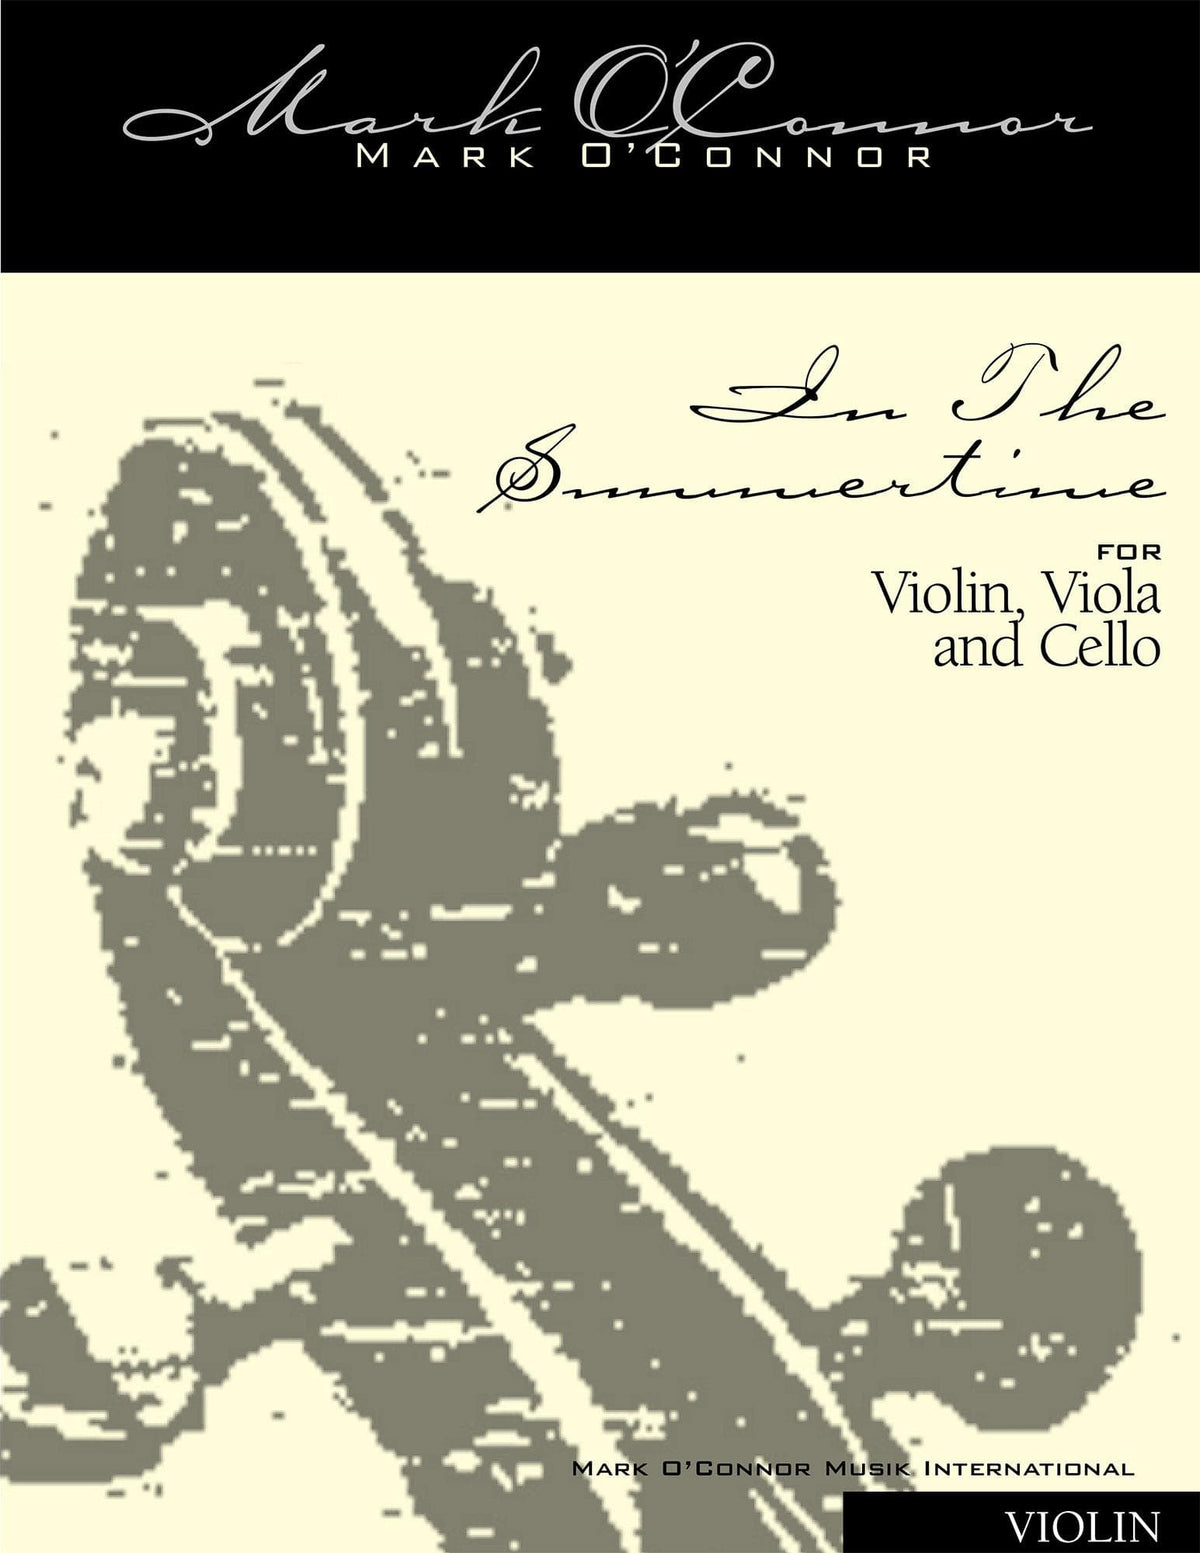 O'Connor, Mark - In the Summertime for Violin, Viola, and Cello - Violin - Digital Download